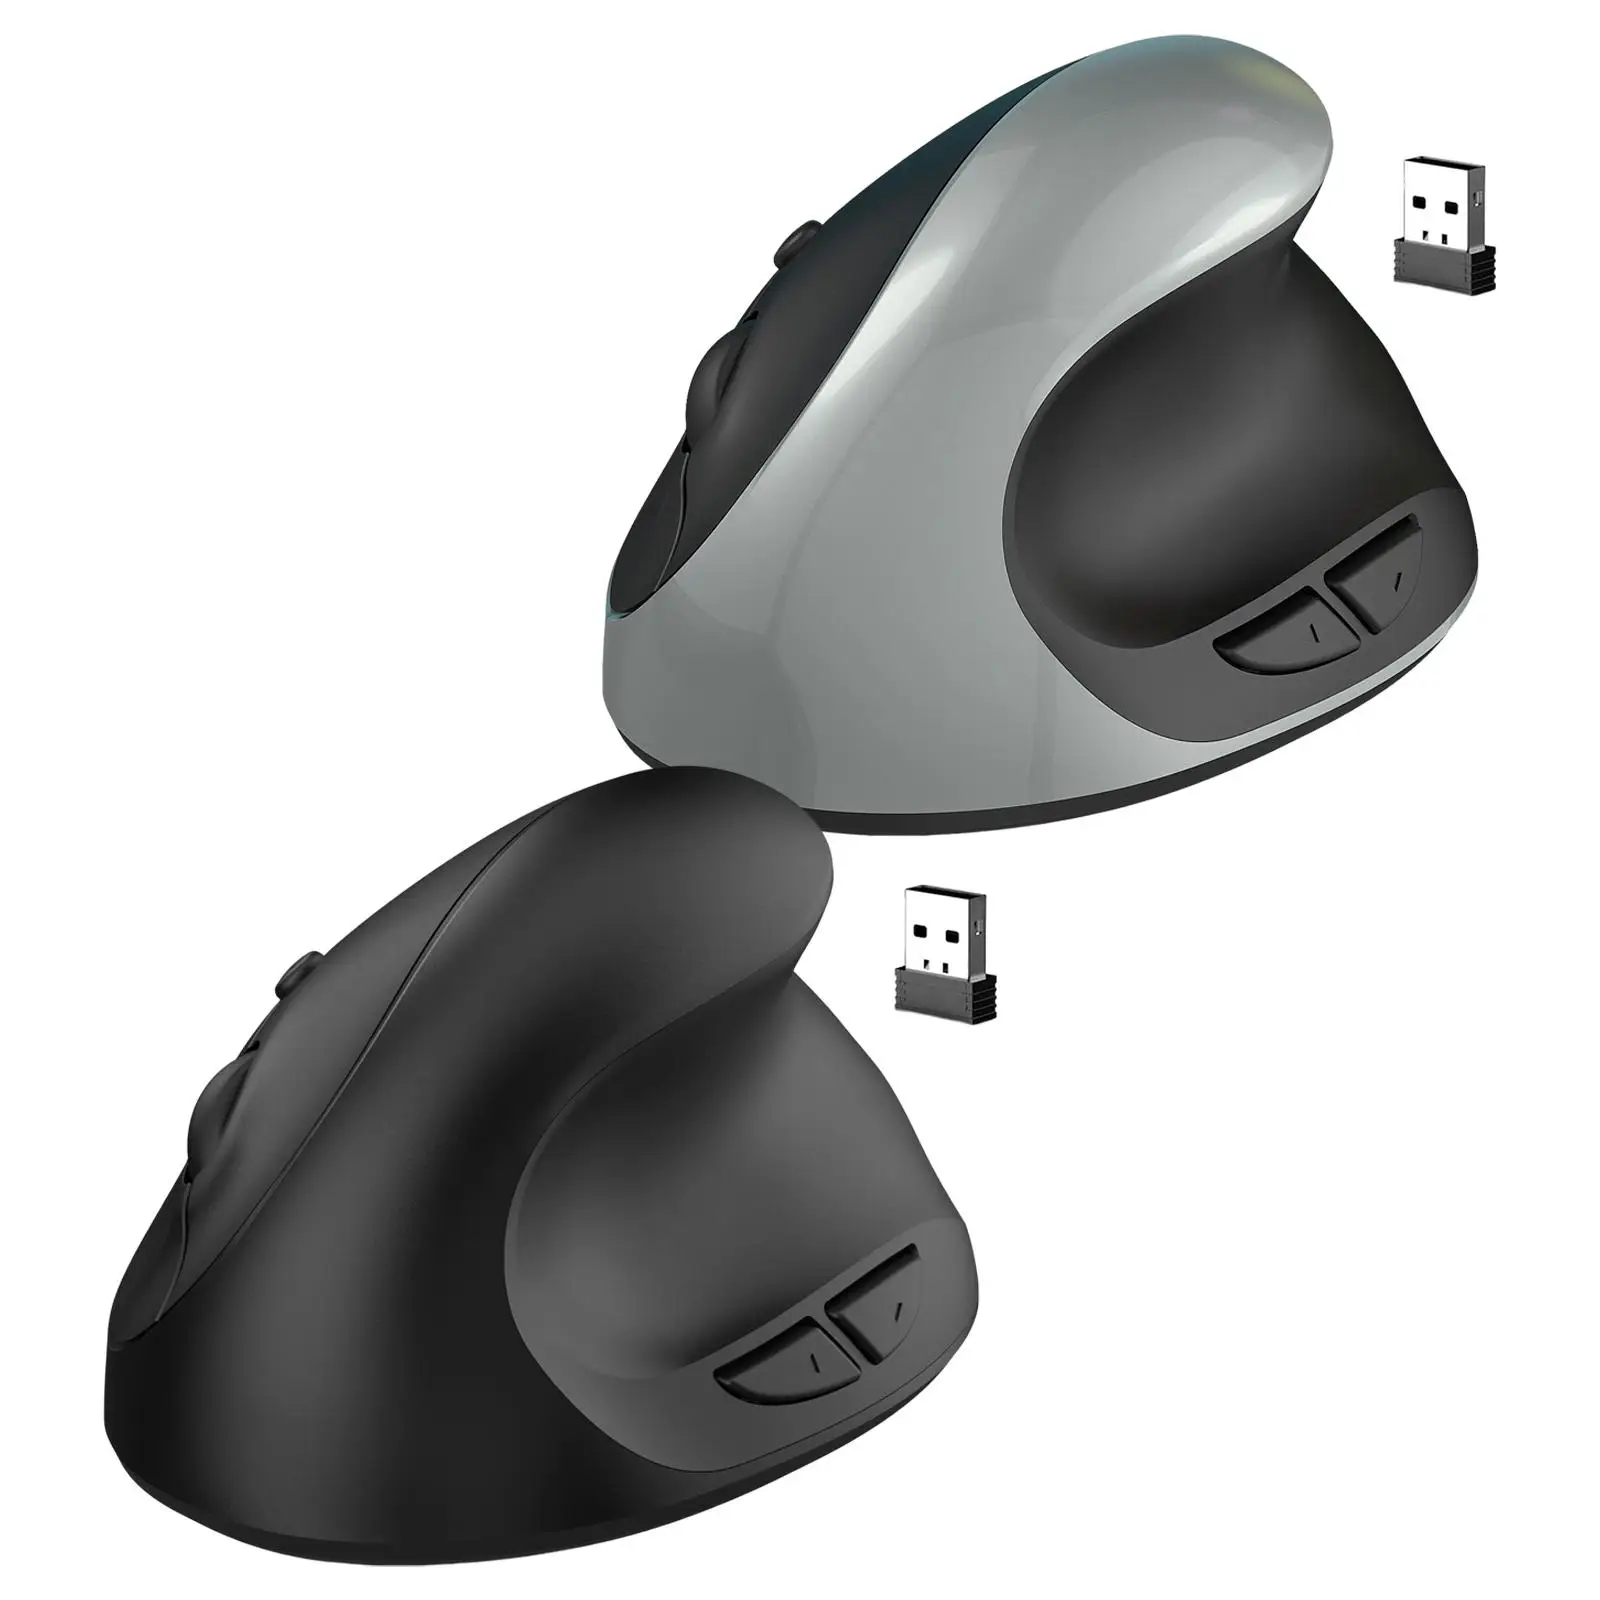 Vertical Mouse USB 800DPI 1600DPI 2400DPI 6 Buttons Ergonomic Gaming Mouse for Computer Laptop Desktop Office Home